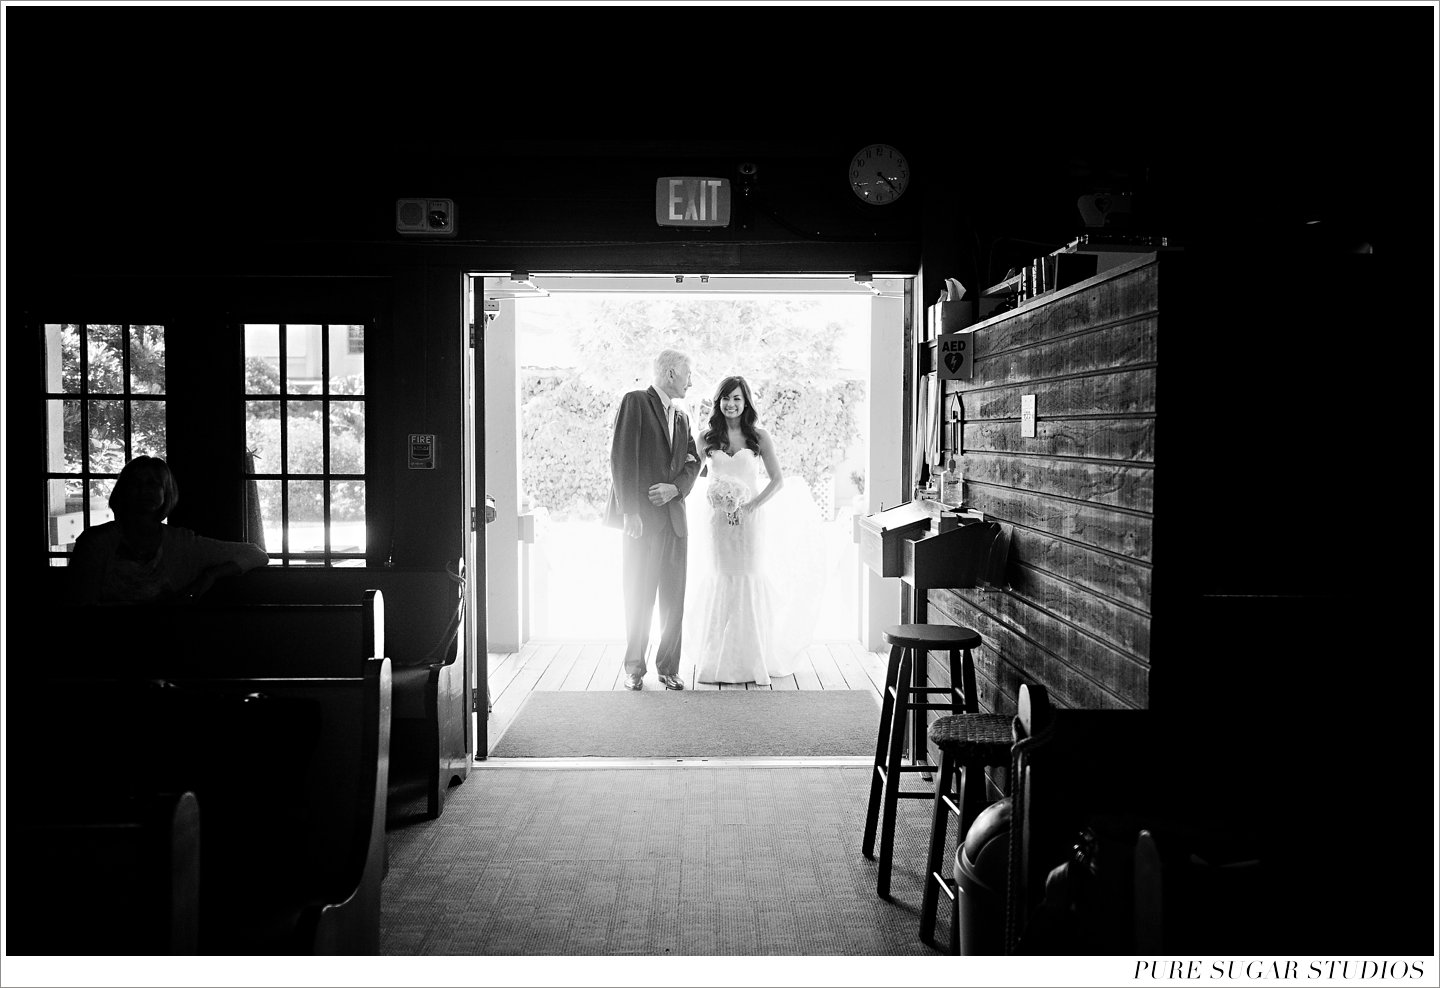 Pure sugar studios_Captiva wedding photography_2305.jpg